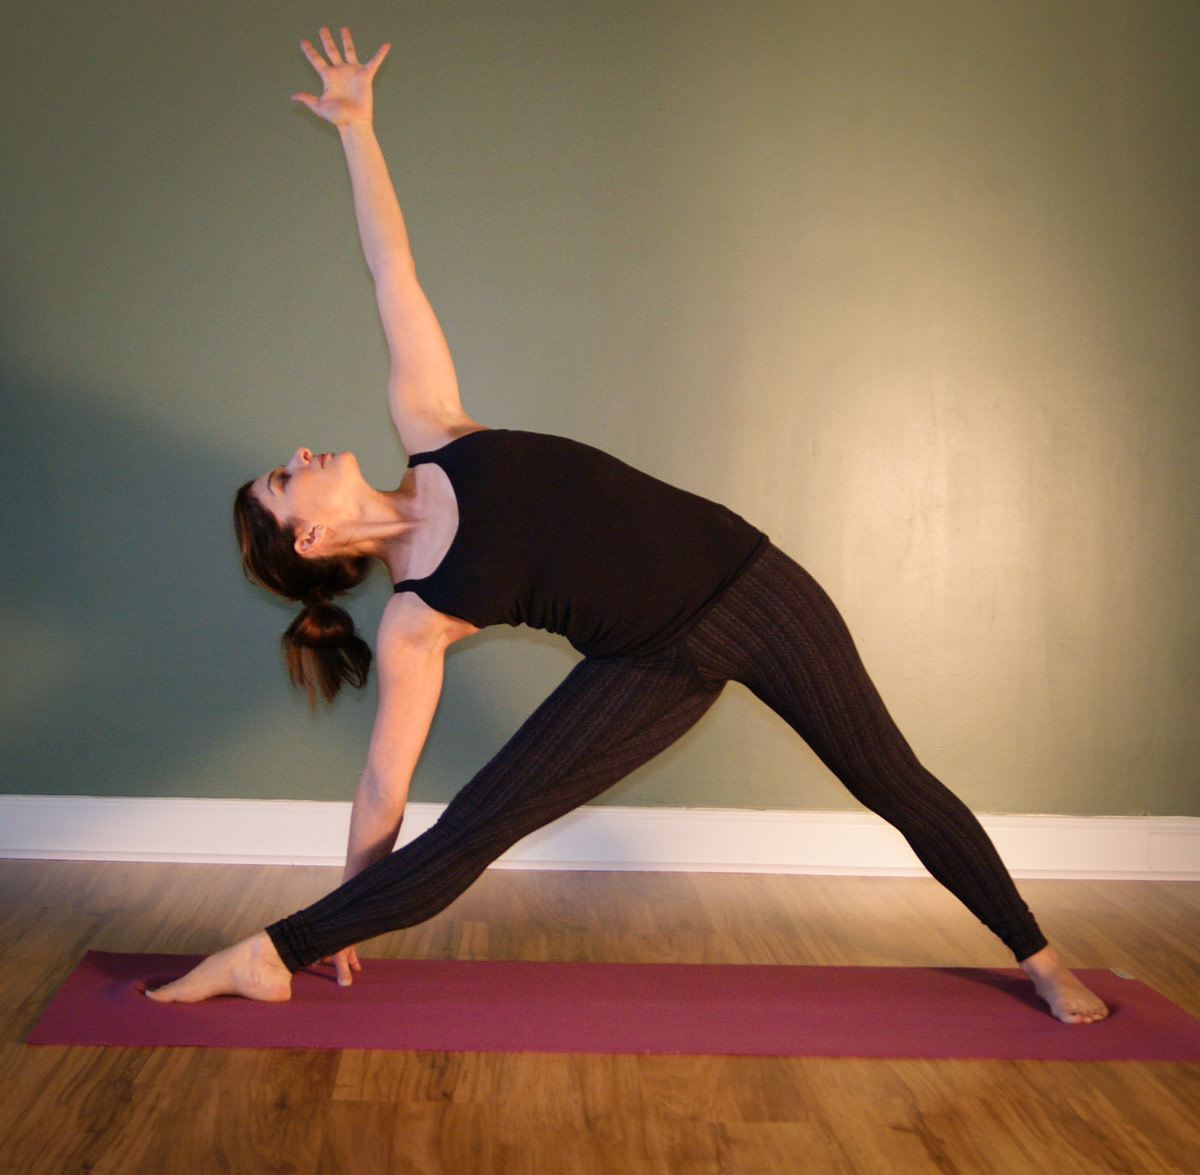 partner yoga poses challenge - Google Search | Парная йога, Йога, Подруги